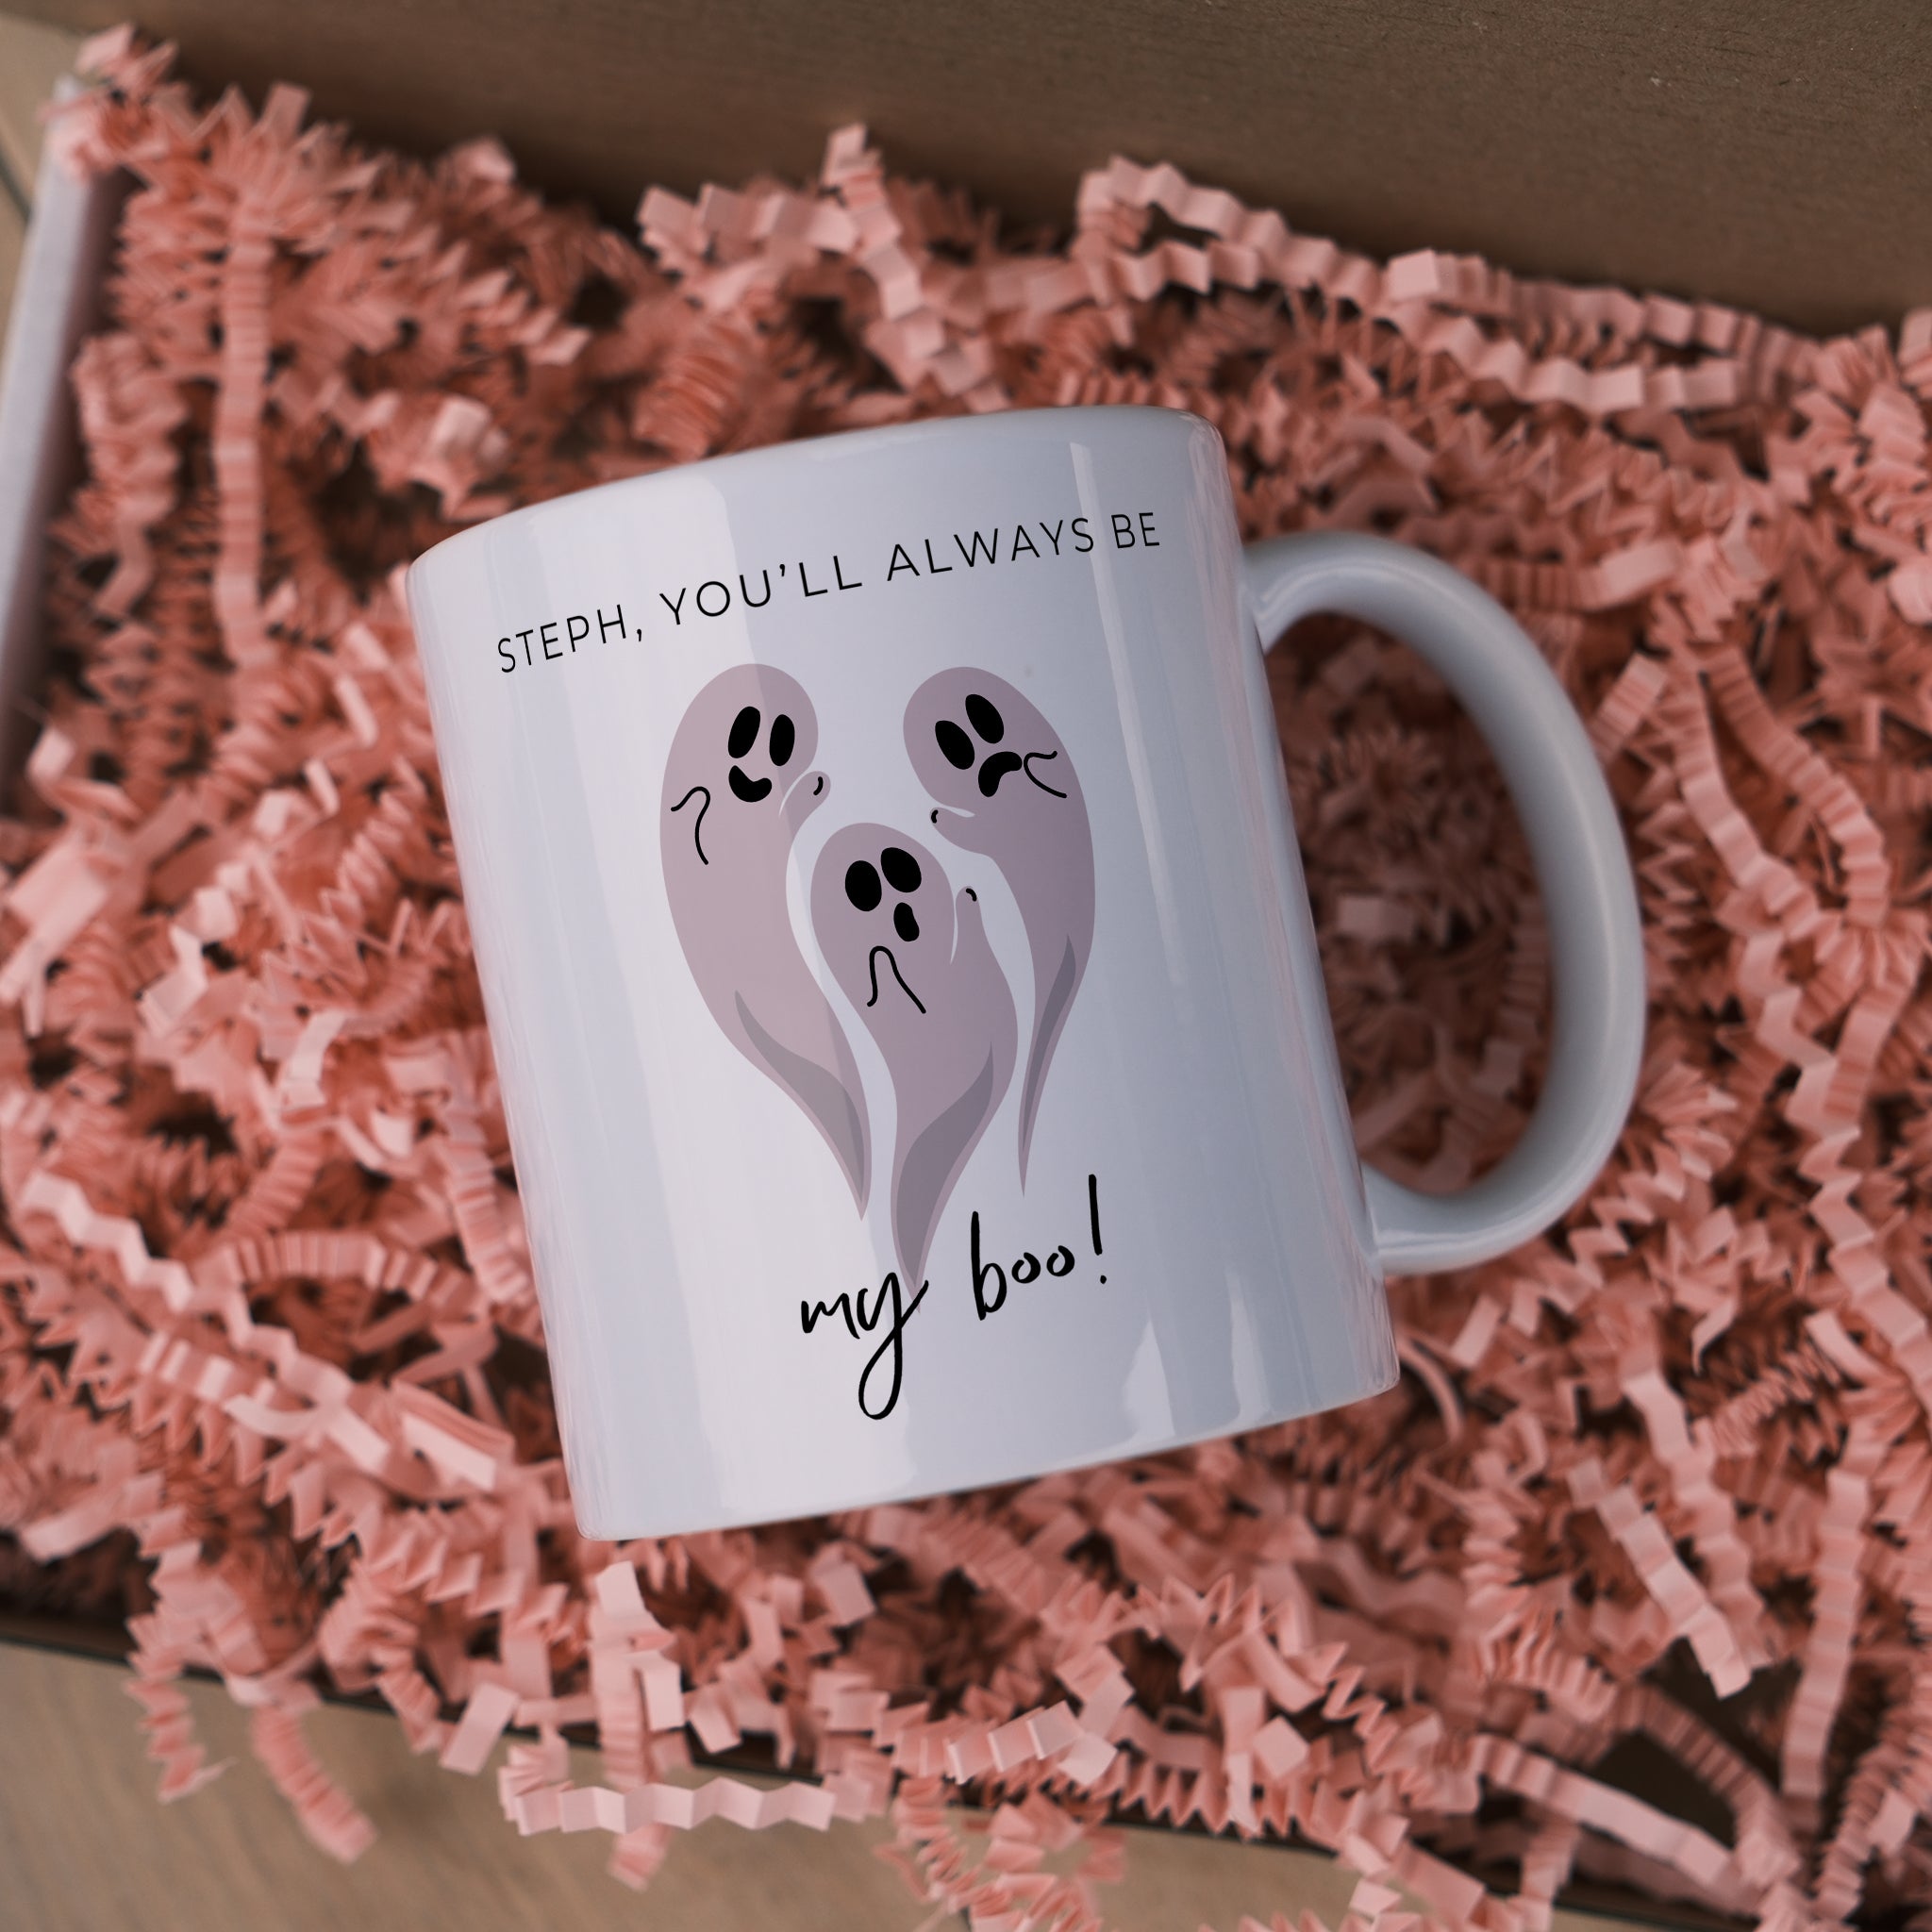 Cute Halloween mug